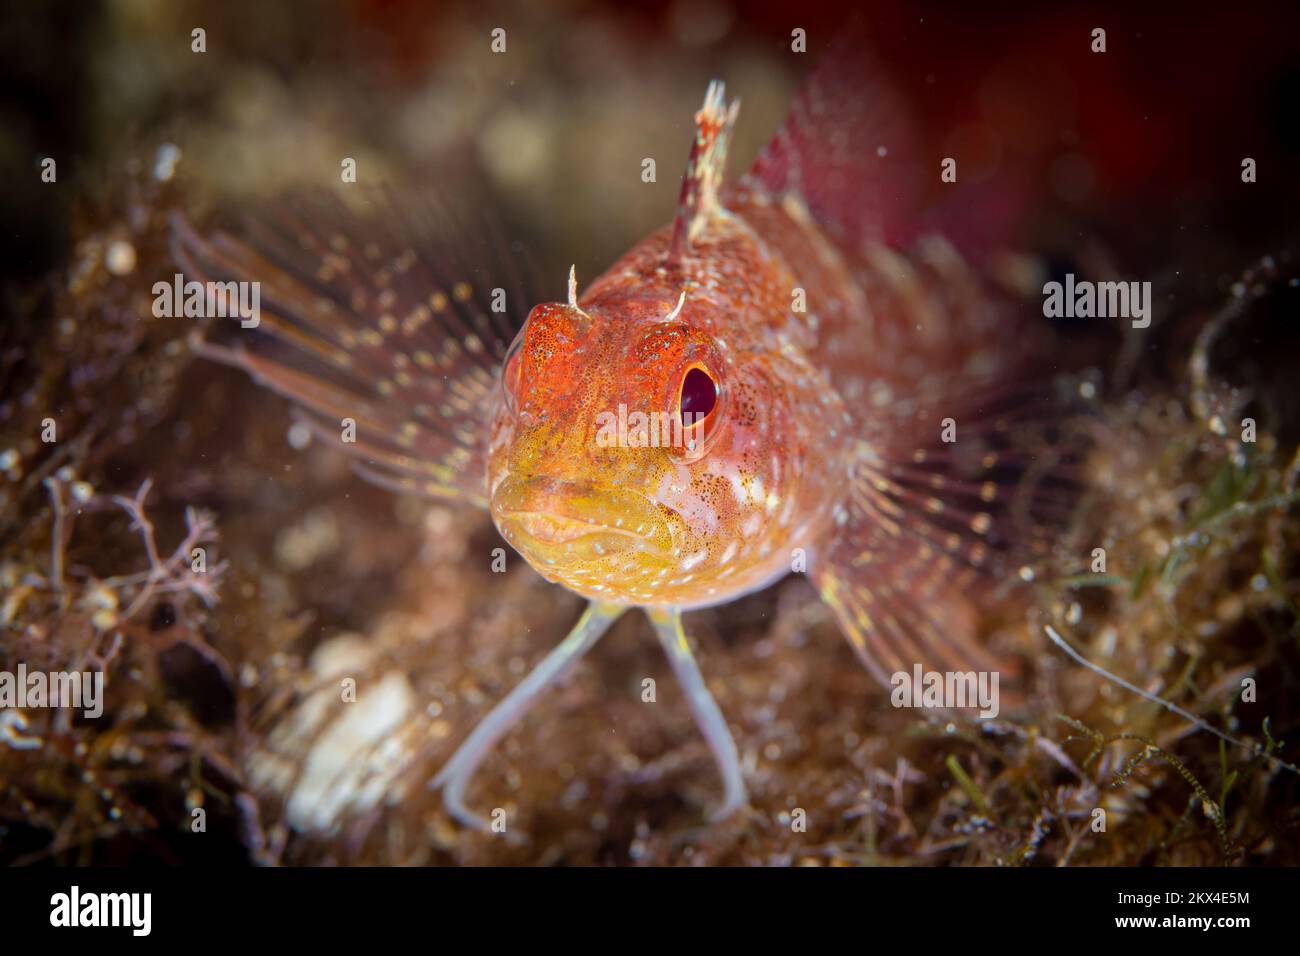 close up portrait of blennie fish in the Mediterranean Sea Stock Photo